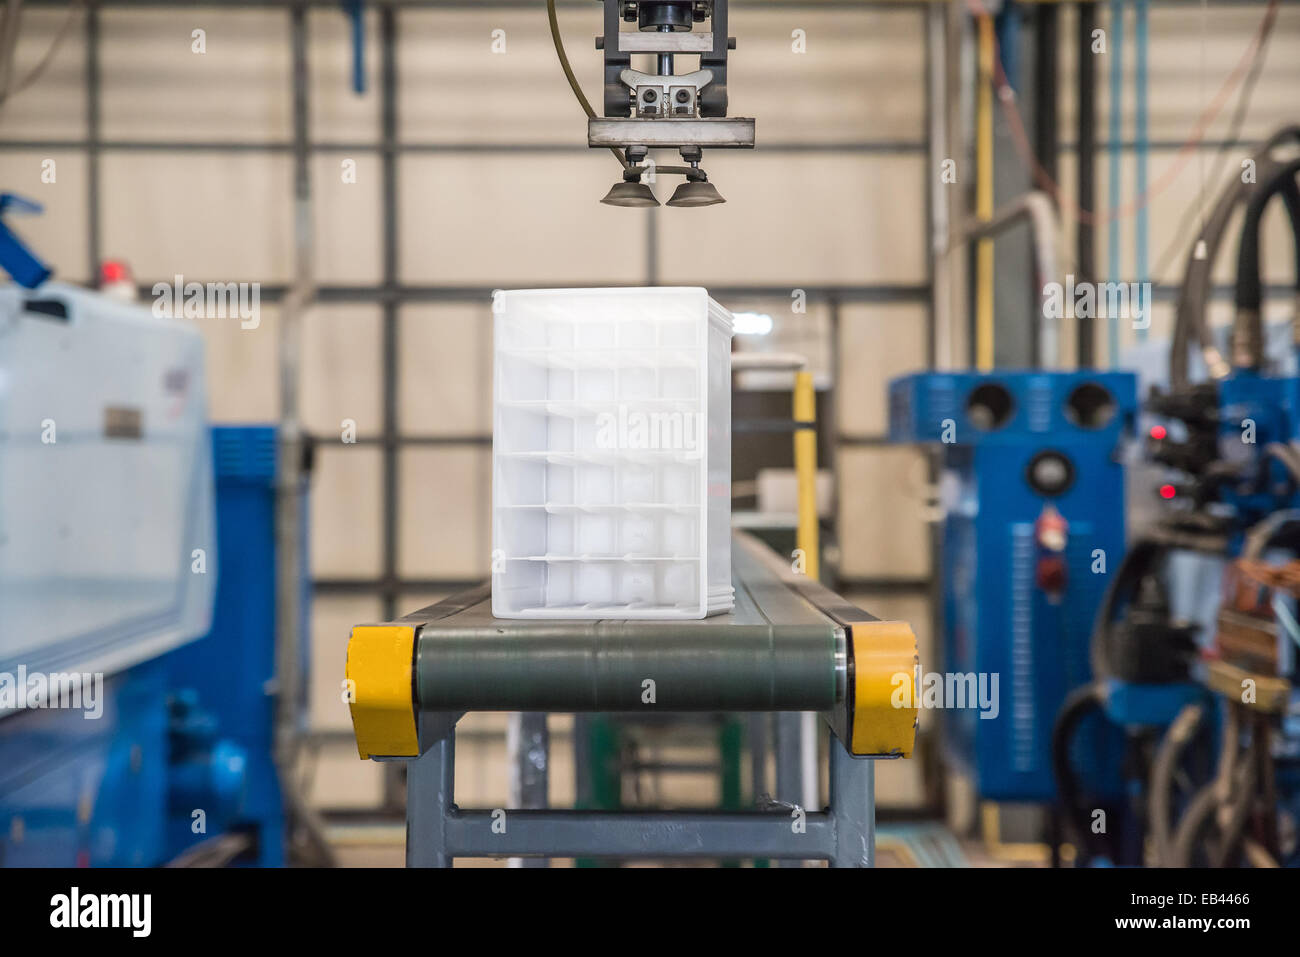 Industrial robot working in factory Stock Photo